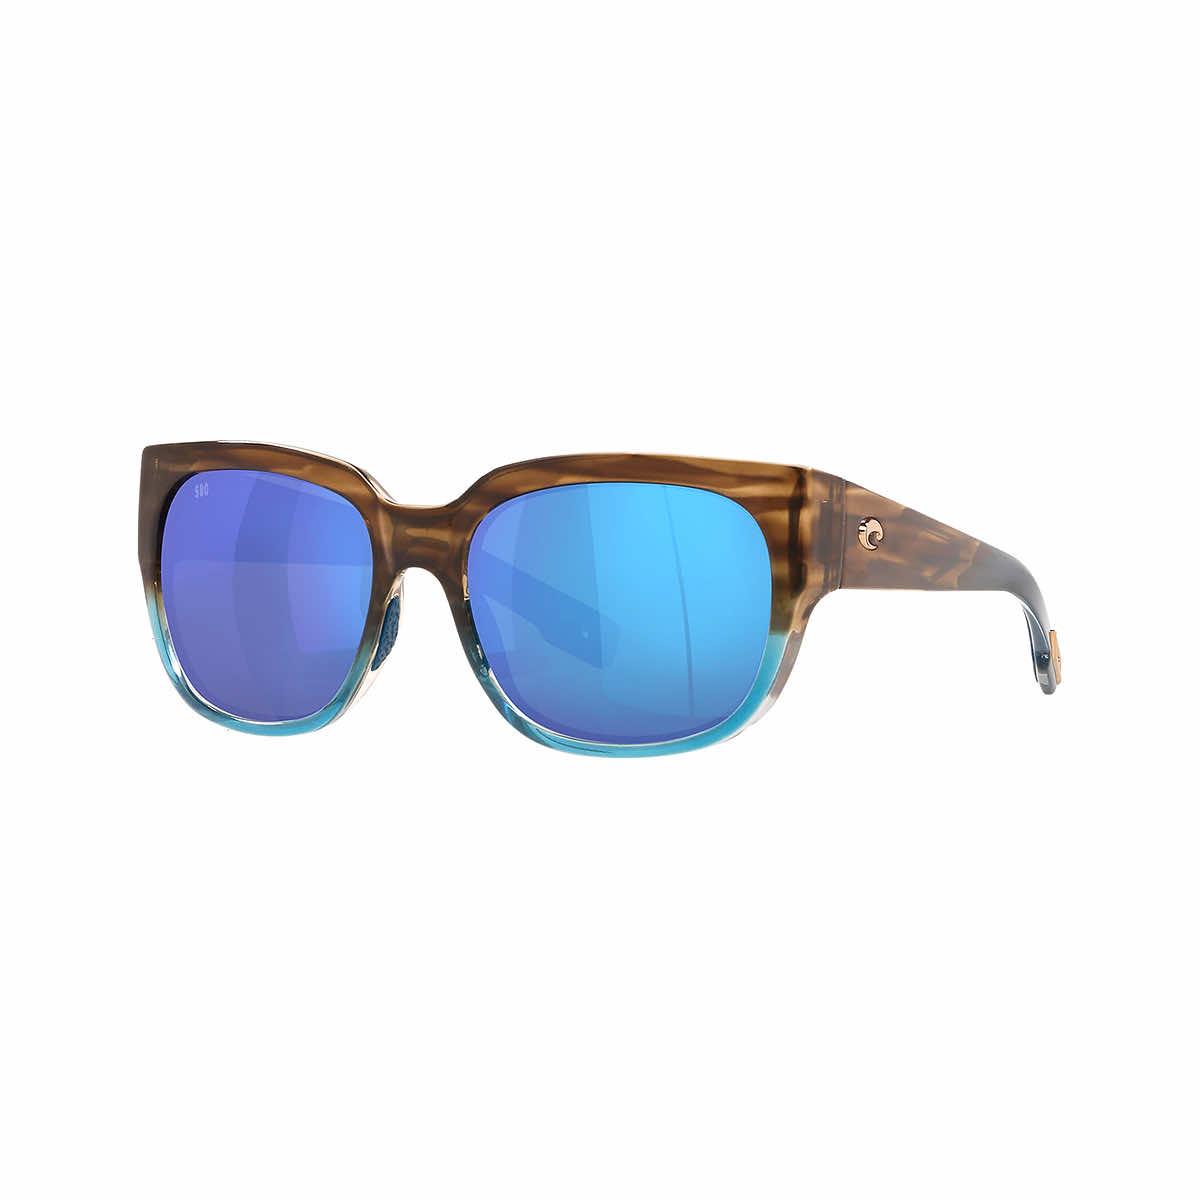  Waterwoman 580g Sunglasses - Polarized Glass